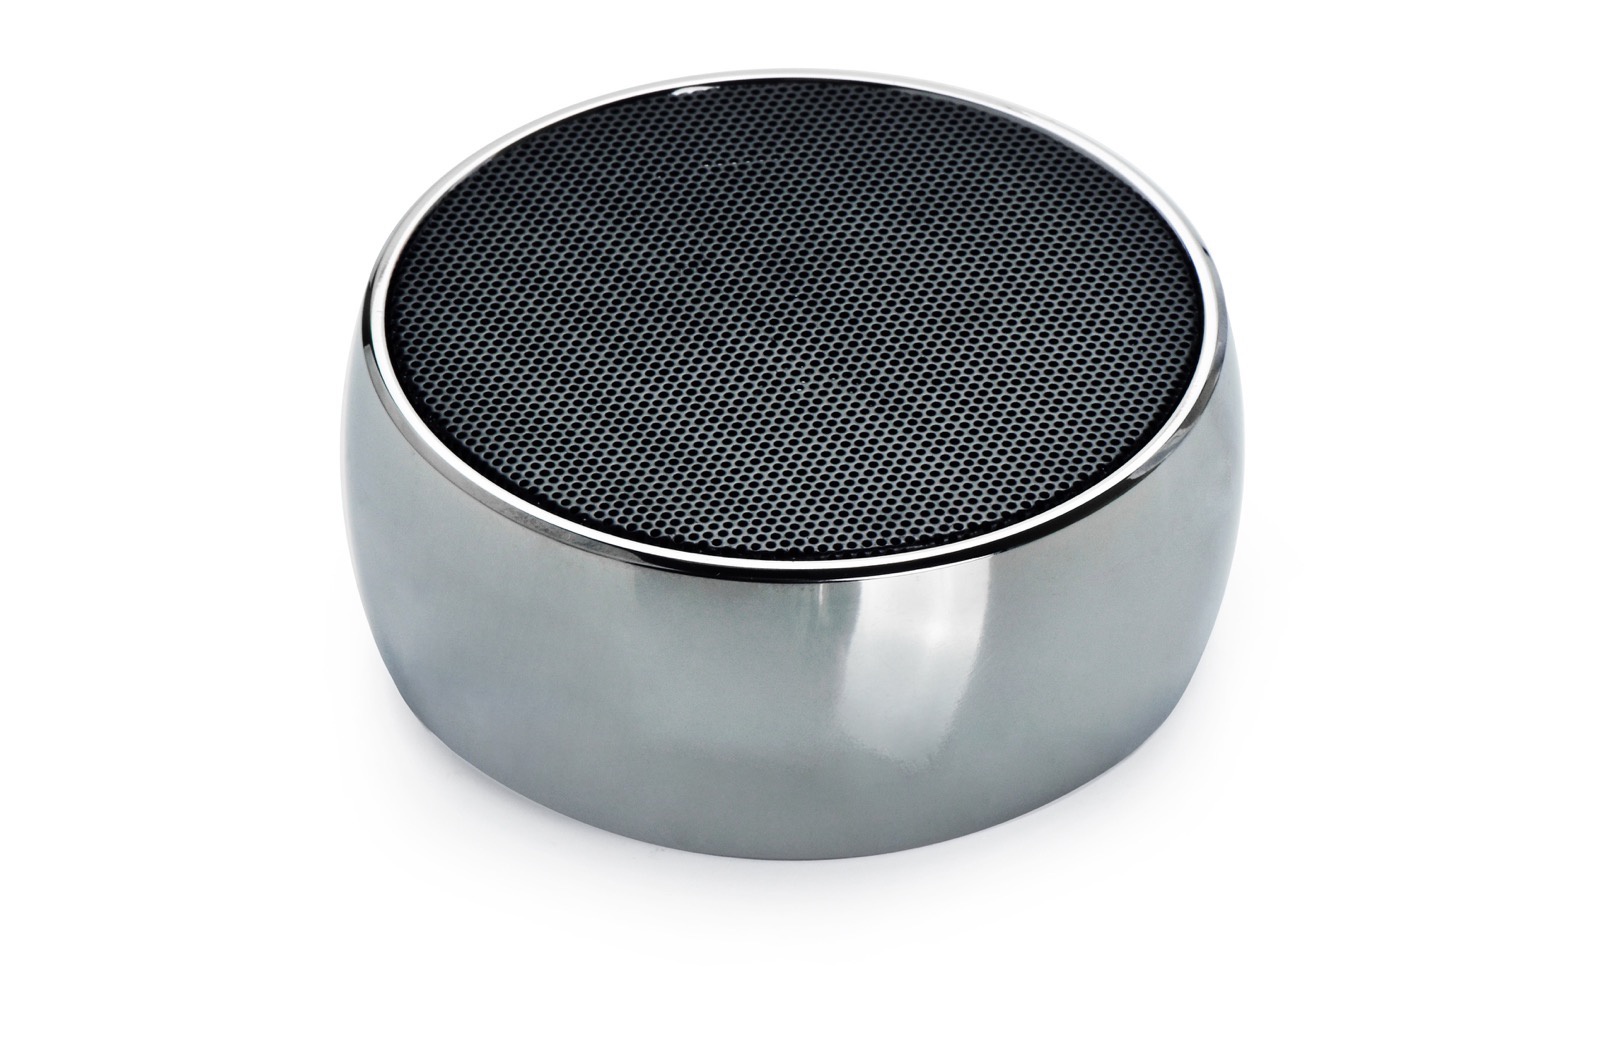 Беспроводная колонка NBS-11. Колонки Bluetooth Wireless Speaker simplicity металл+кольцо. Bs01 Wireless Speaker. Bluetooth колонка simplicity bs02 00/25.